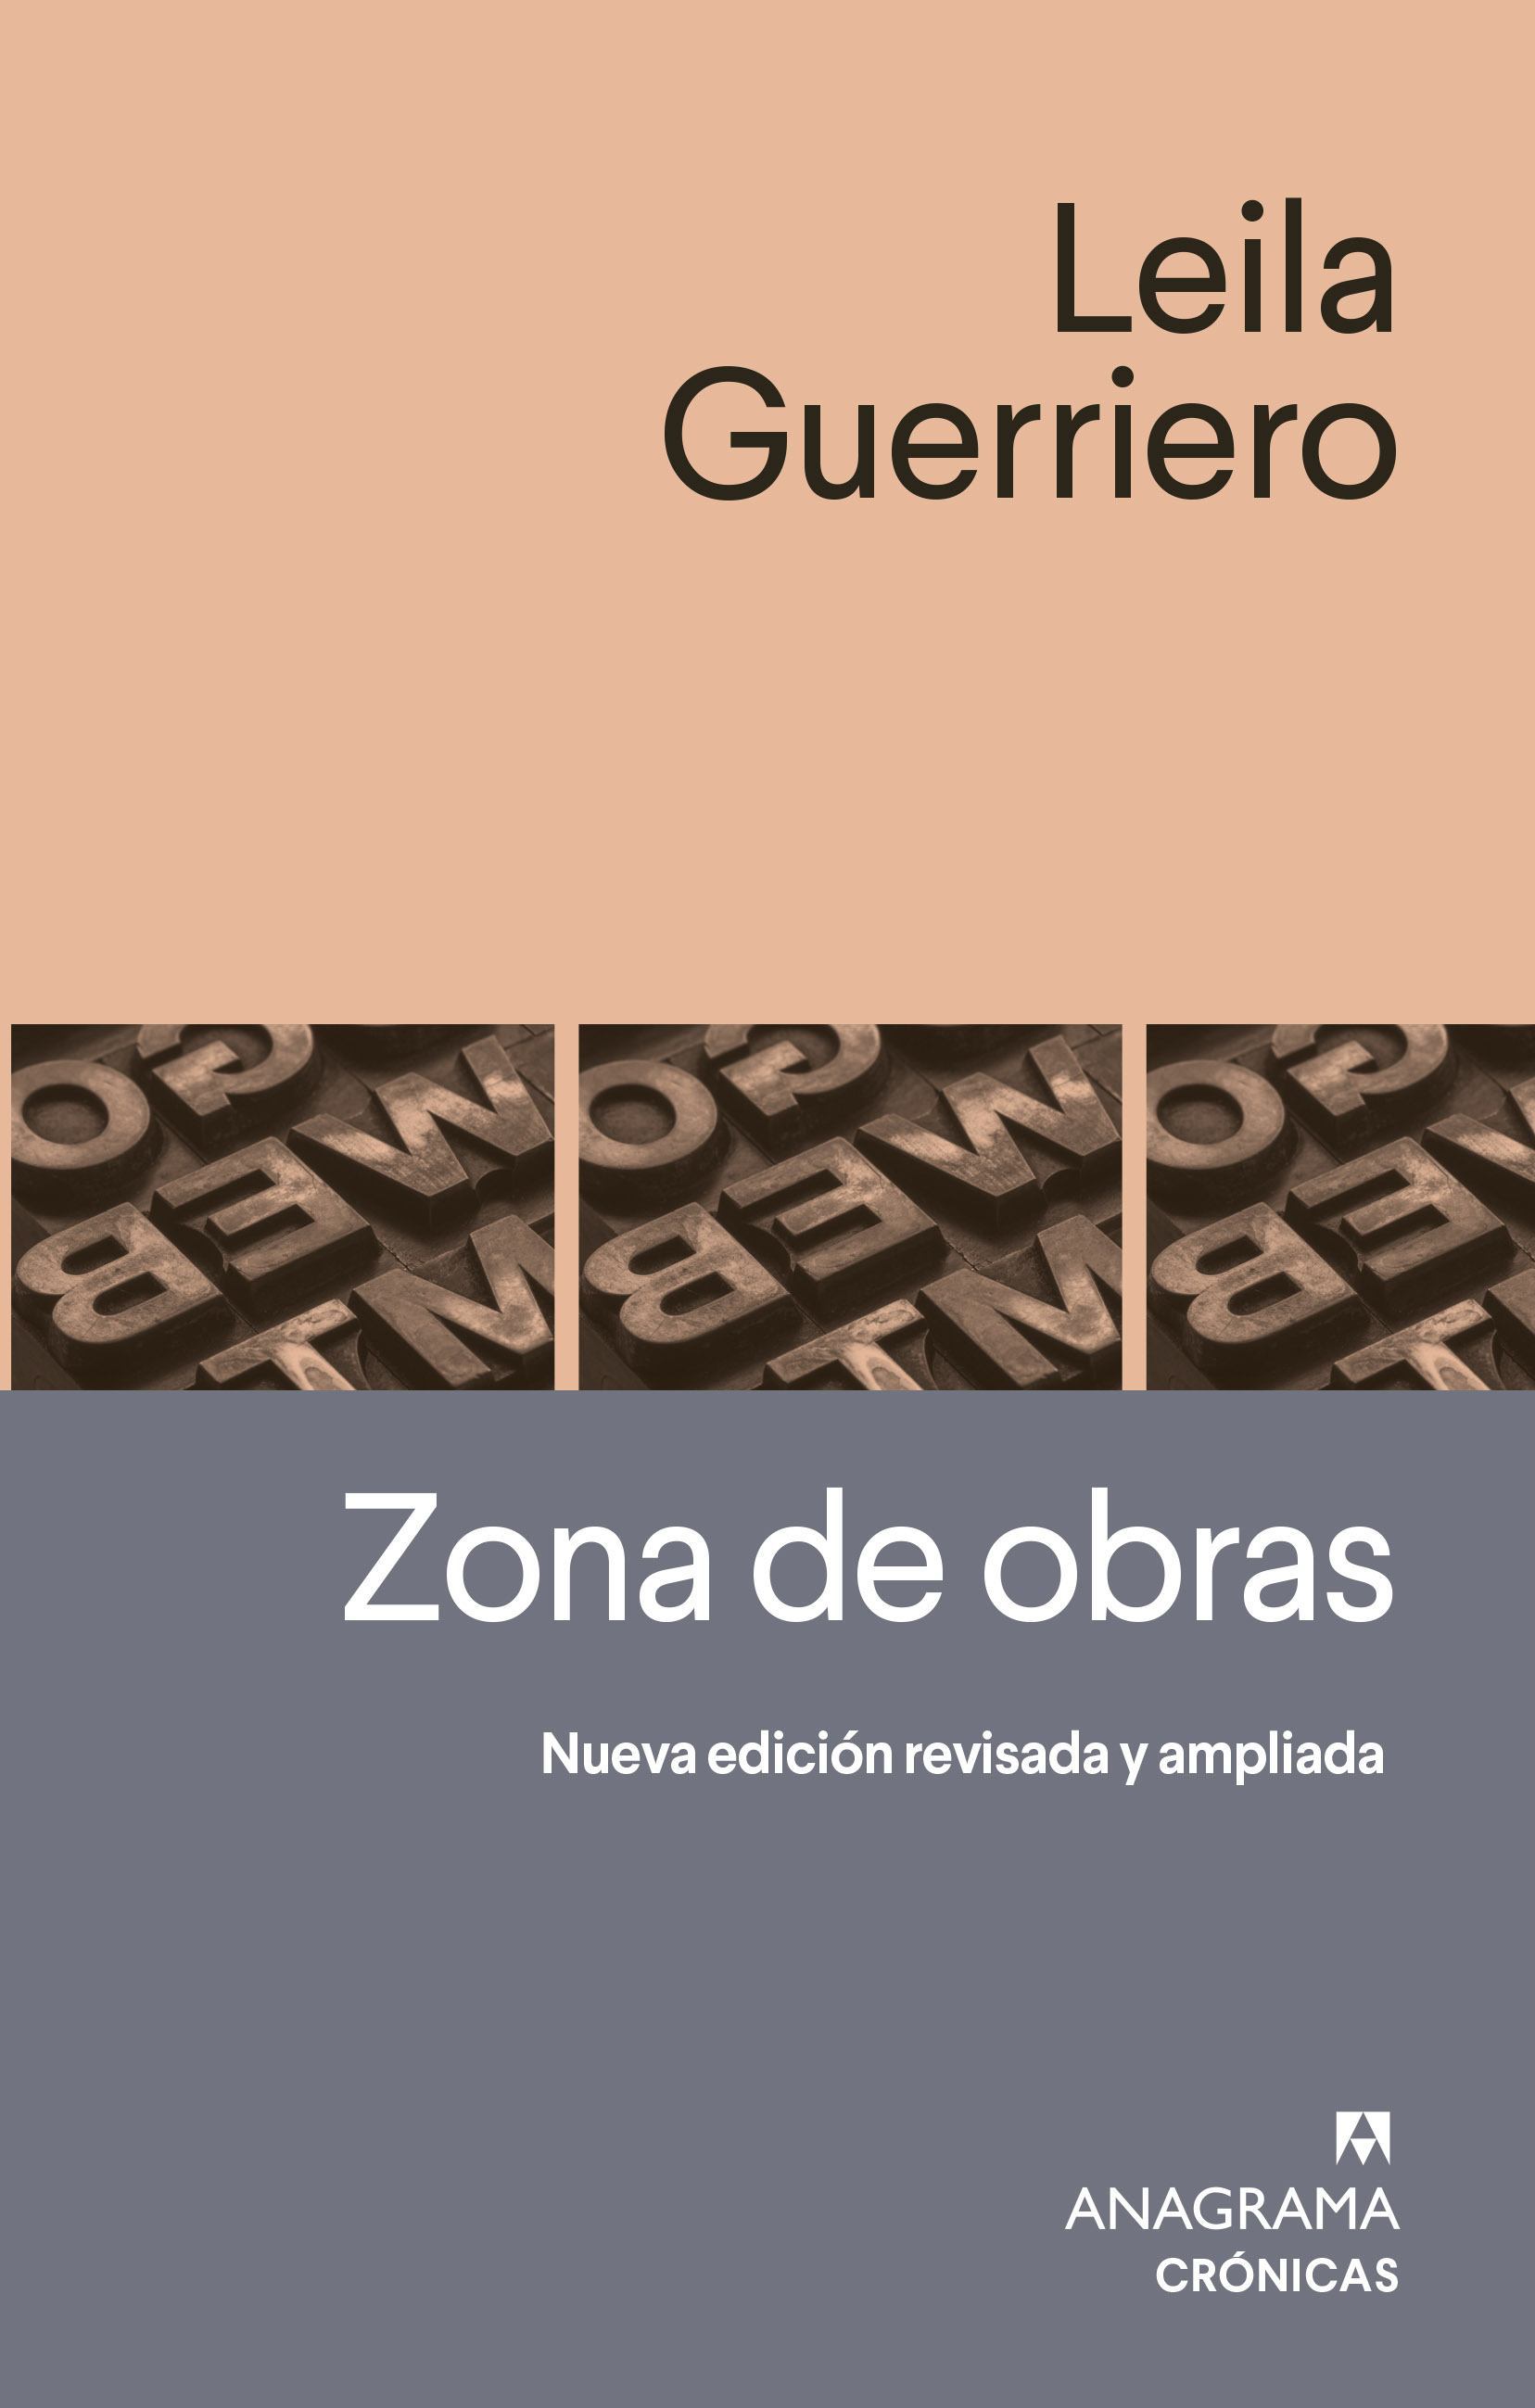 Zona de obras - Guerriero, Leila - 978-84-339-2627-2 - Editorial